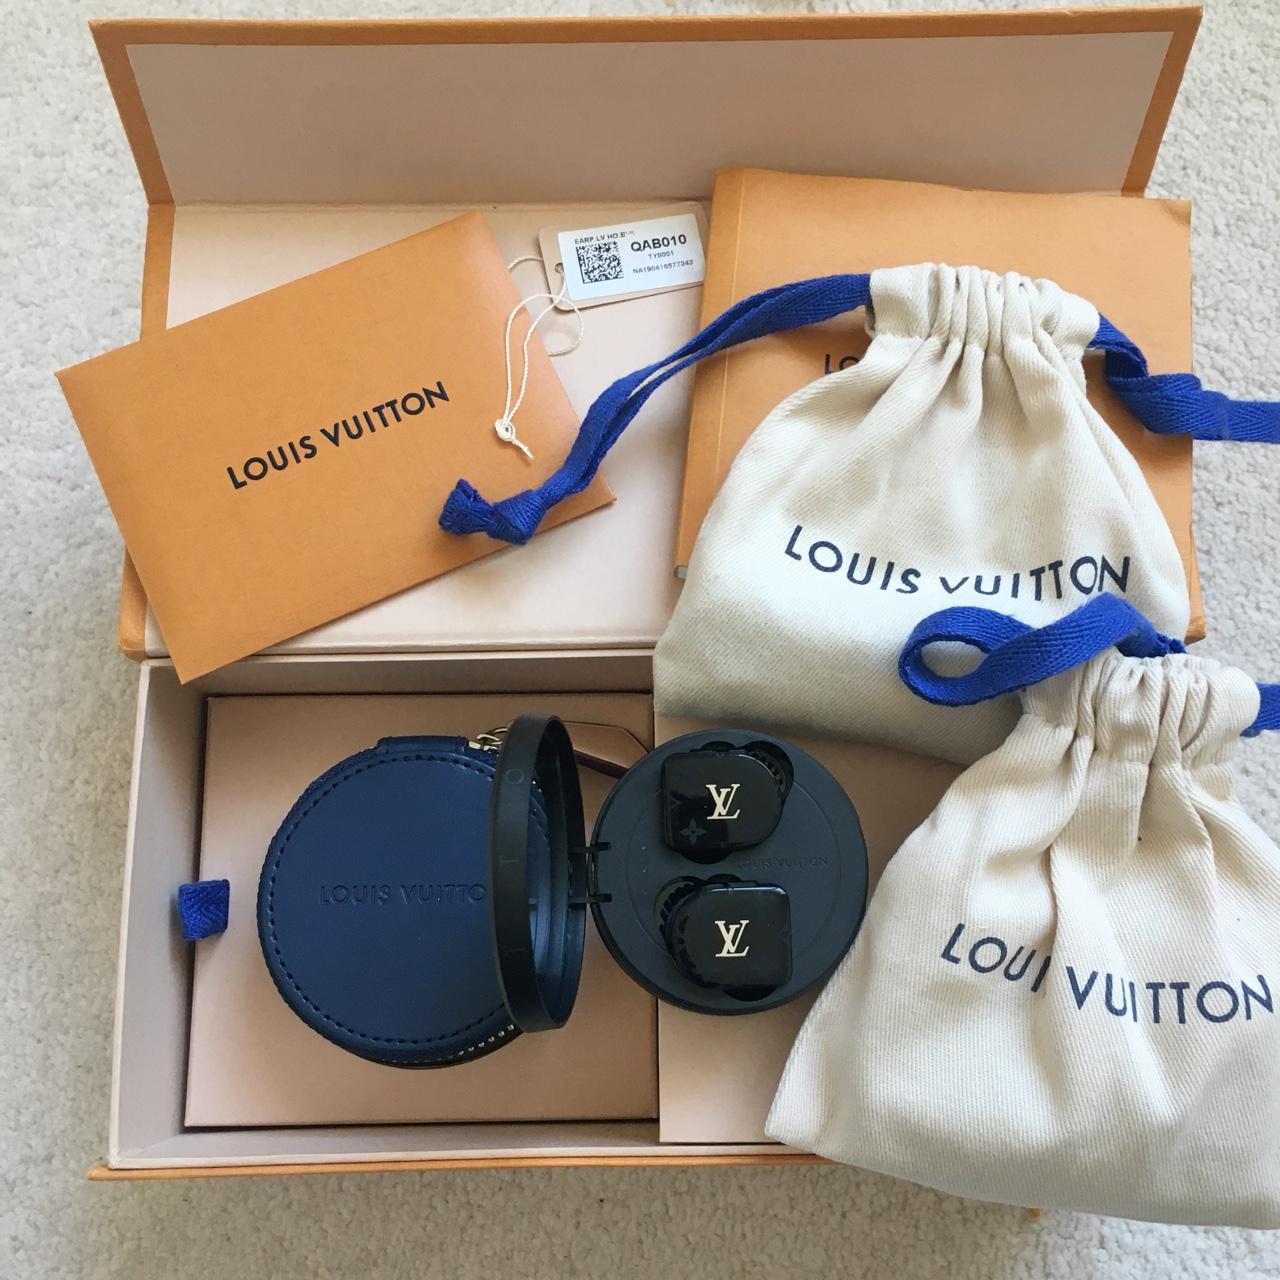 Horizon earphones, the “airpods” by Louis Vuitton